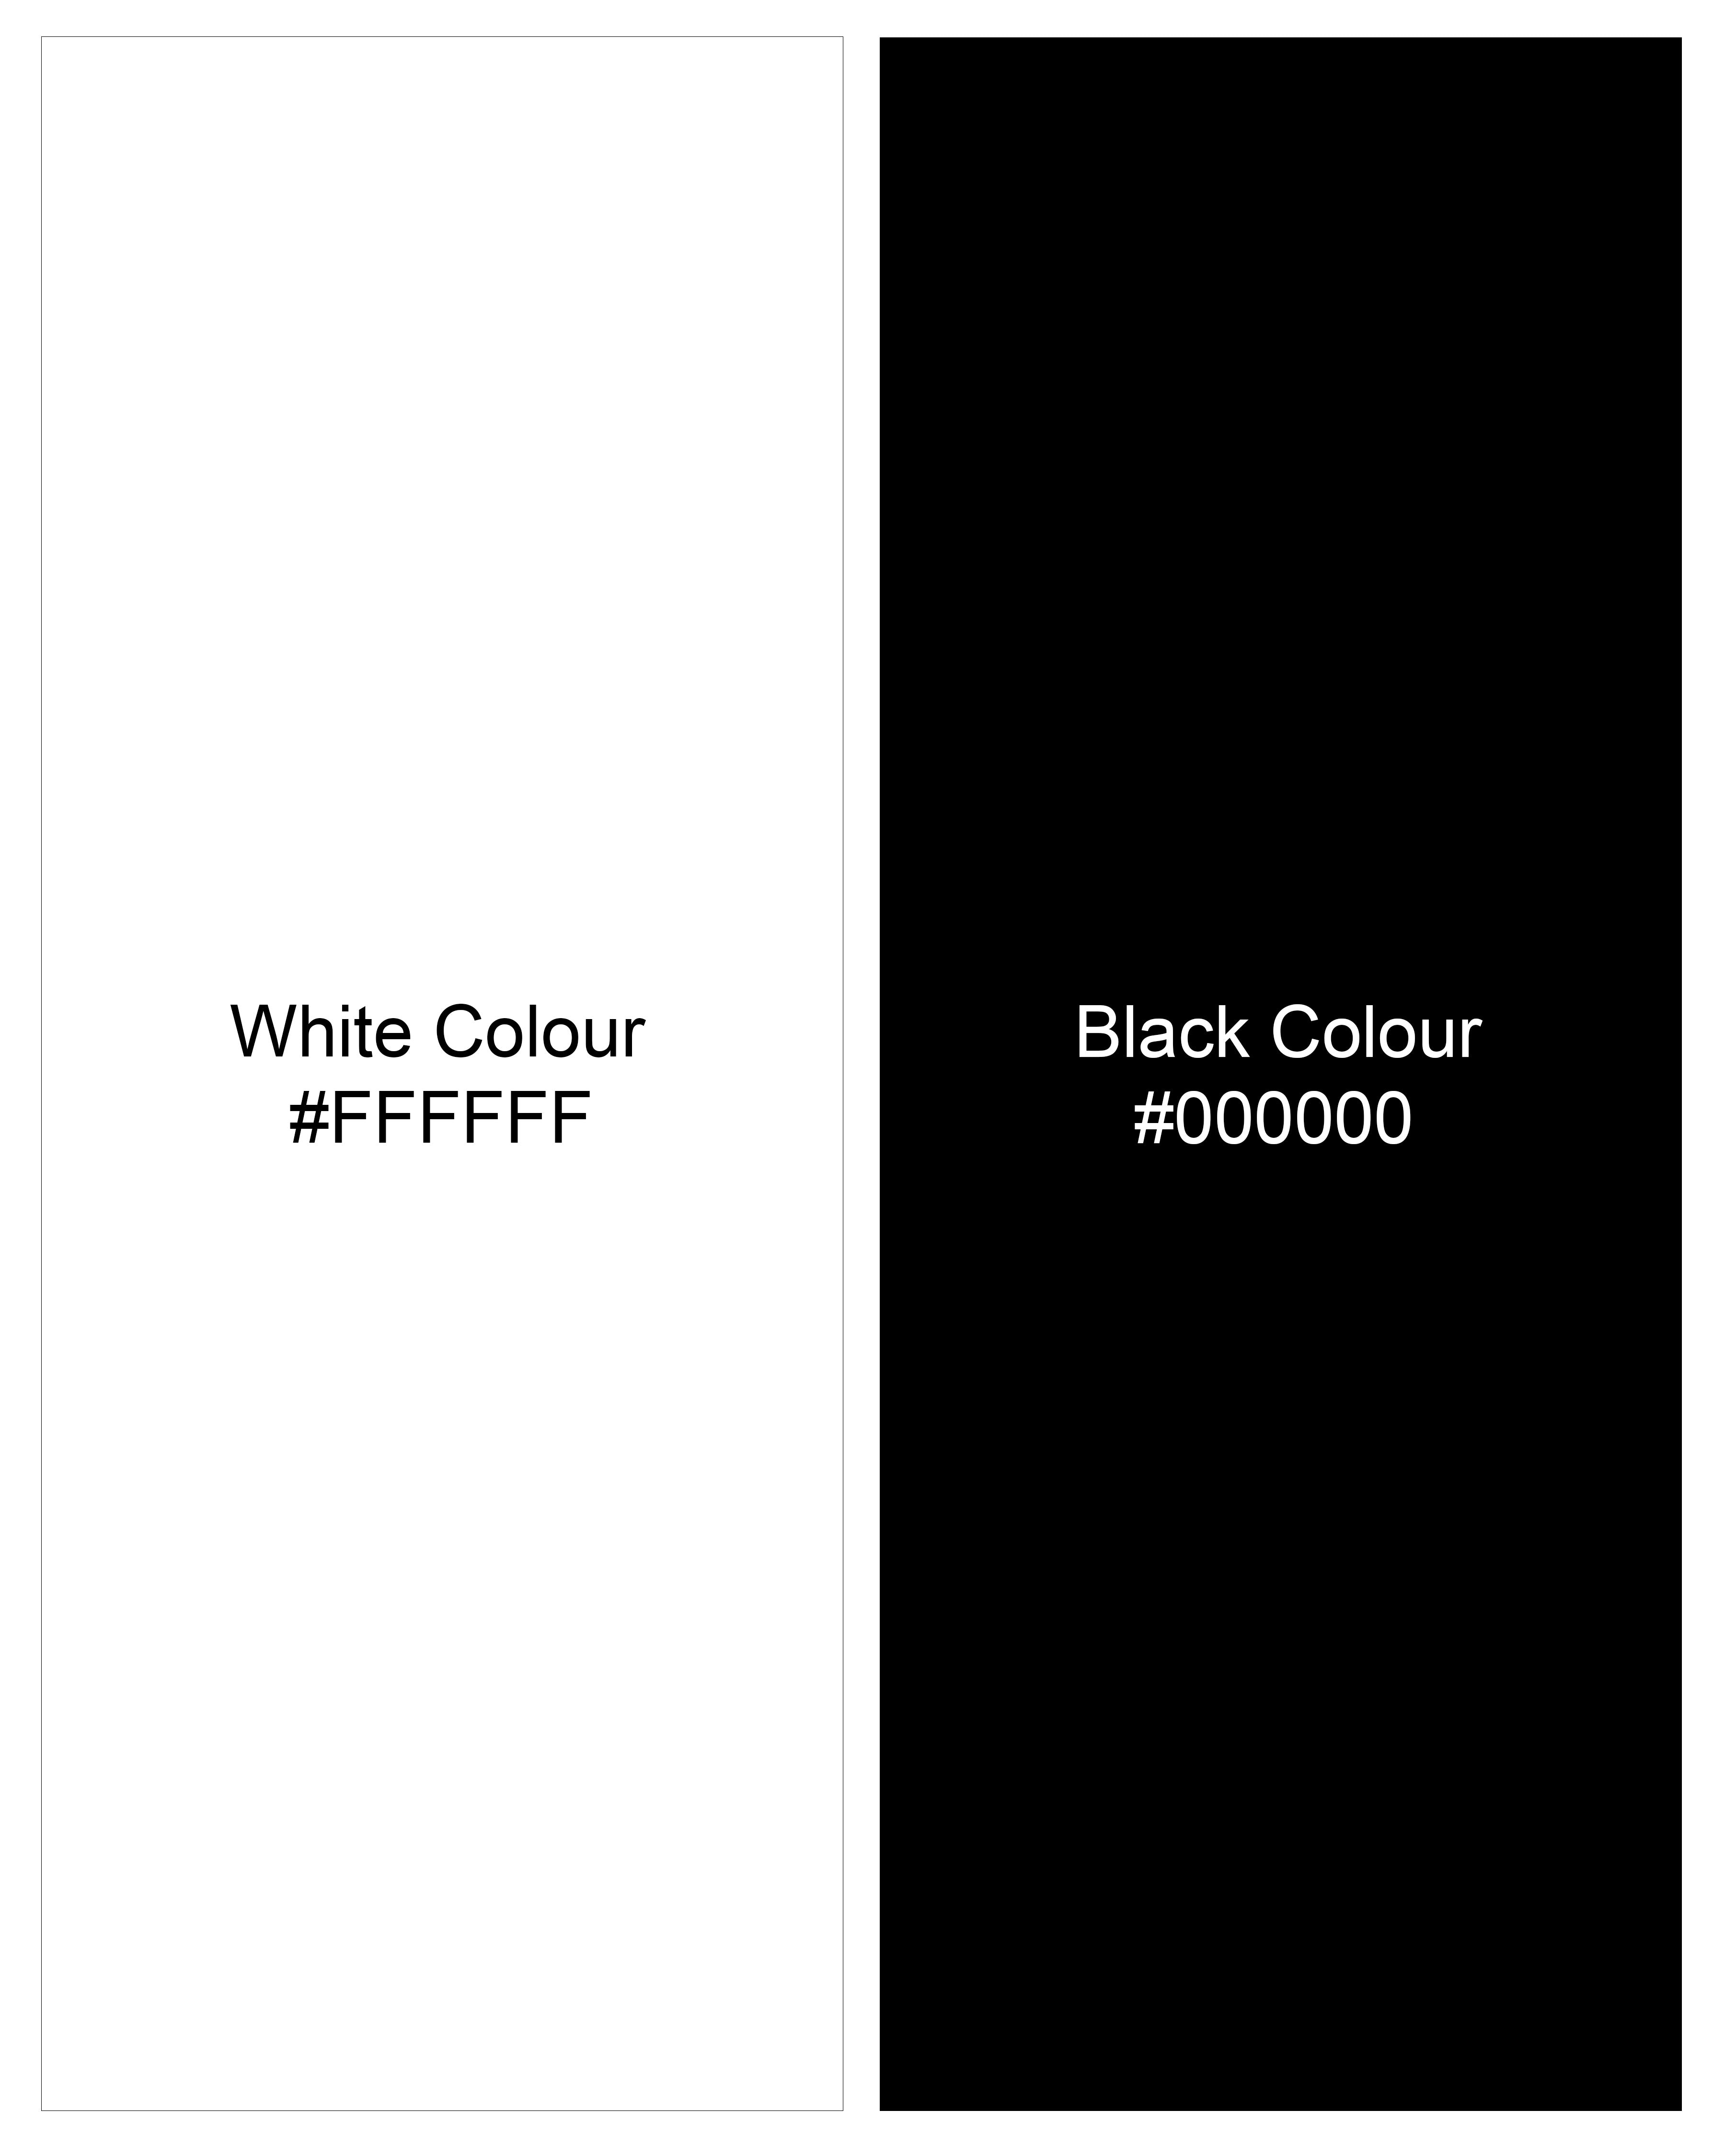 Bright White and Black Printed Premium Cotton Designer Bush Shirt 9990-WOC-ZP-P466-38, 9990-WOC-ZP-P466-39, 9990-WOC-ZP-P466-40, 9990-WOC-ZP-P466-42, 9990-WOC-ZP-P466-44, 9990-WOC-ZP-P466-46, 9990-WOC-ZP-P466-48, 9990-WOC-ZP-P466-50, 9990-WOC-ZP-P466-52 